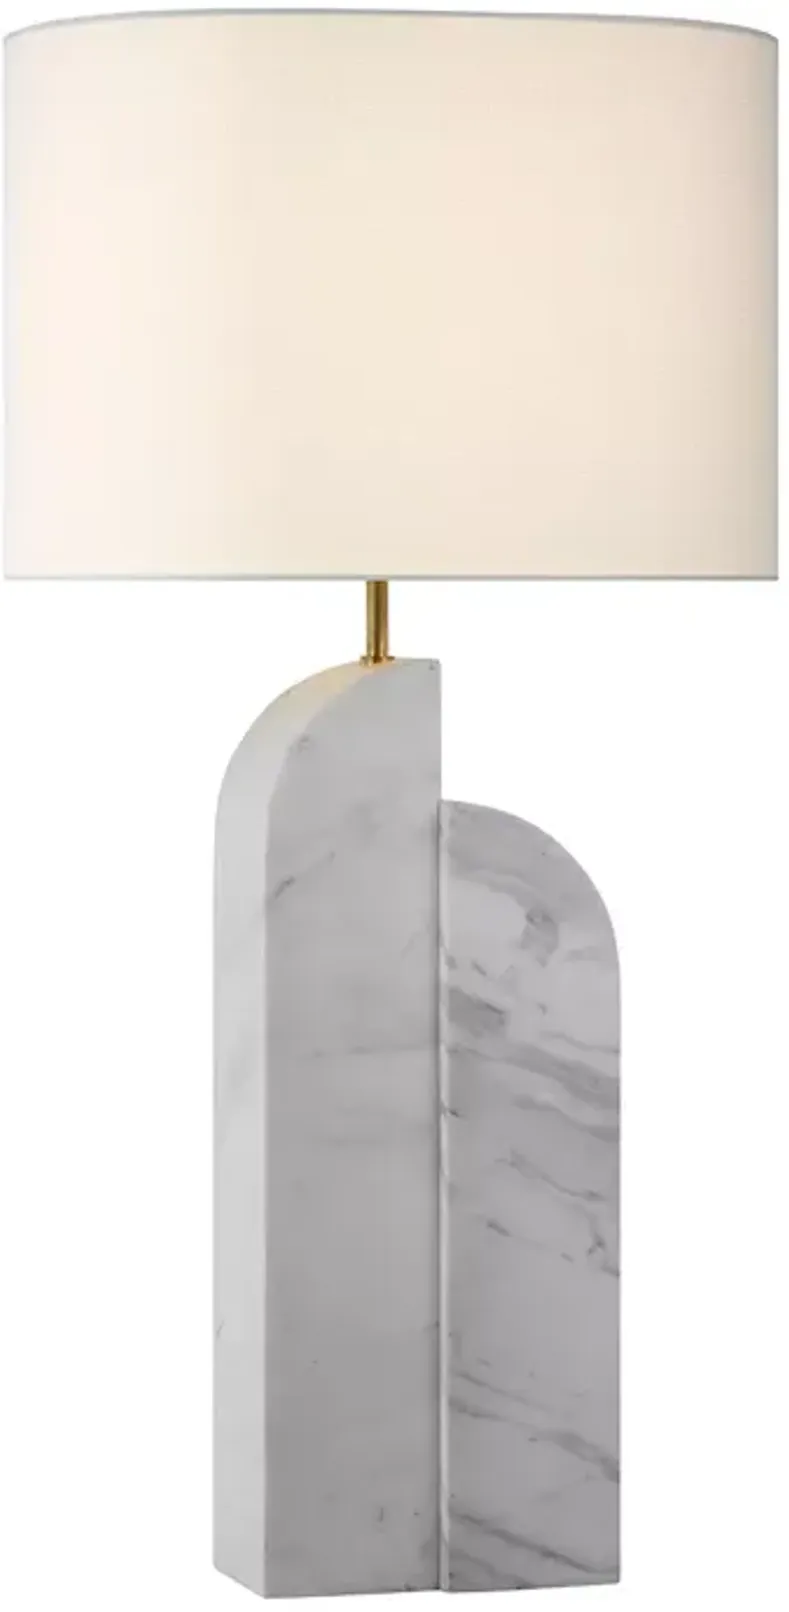 Kelly Wearstler Savoye Large Right Table Lamp